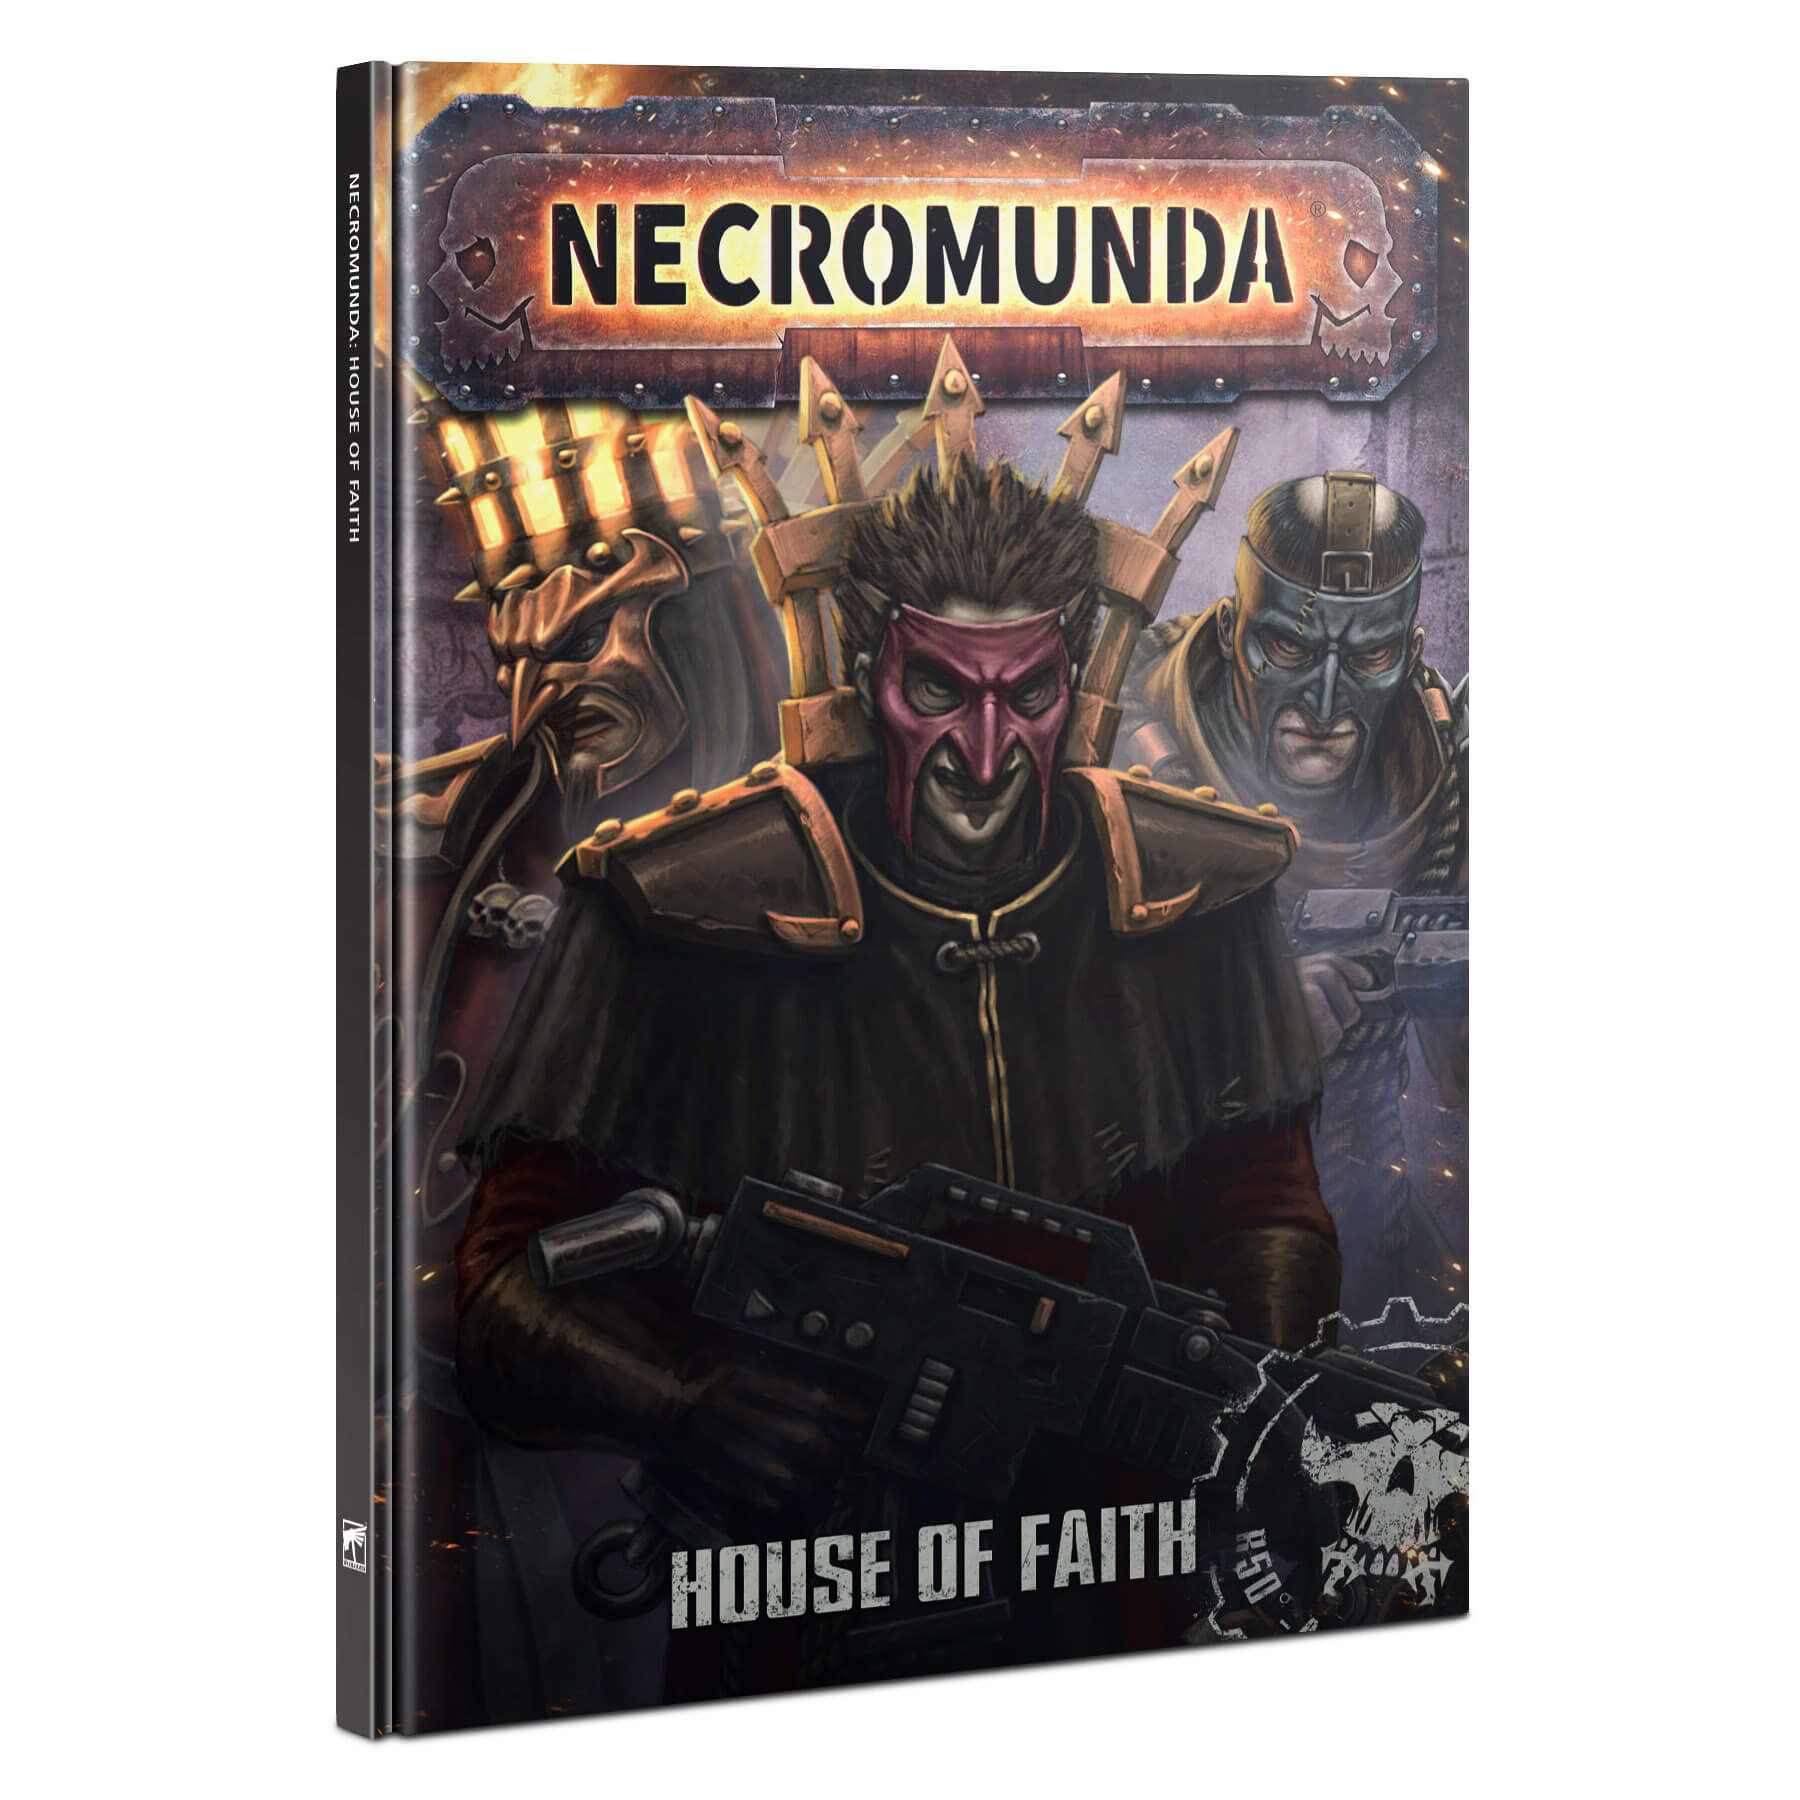 Necromunda House of Faith Hardcover